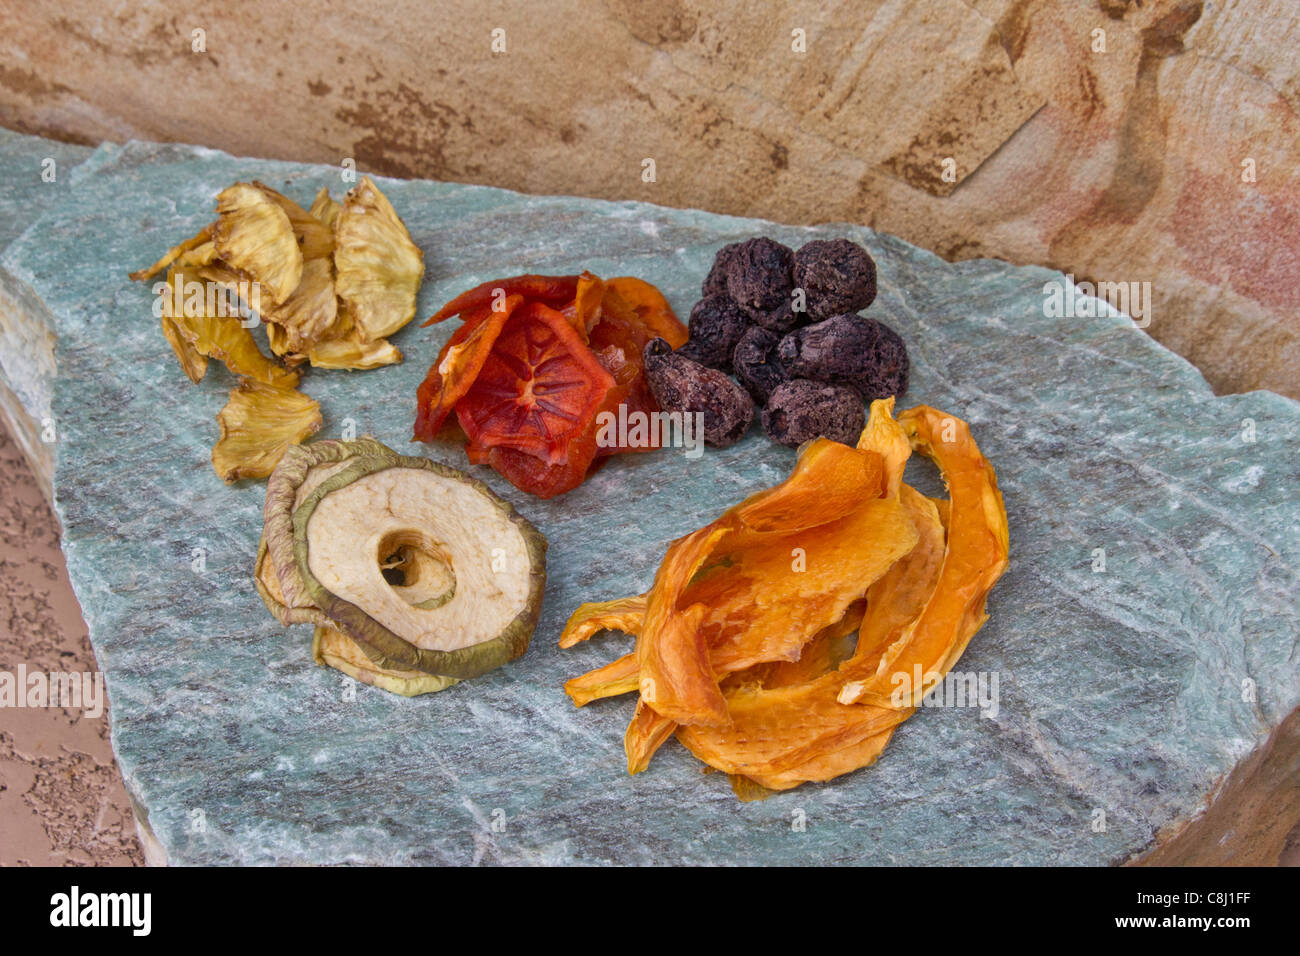 black figs, dried fruits, Ebenaceae, edible fruit, Fuyu, Granny apples, healthful living, Japanese persimmons, kaki, natural foo Stock Photo